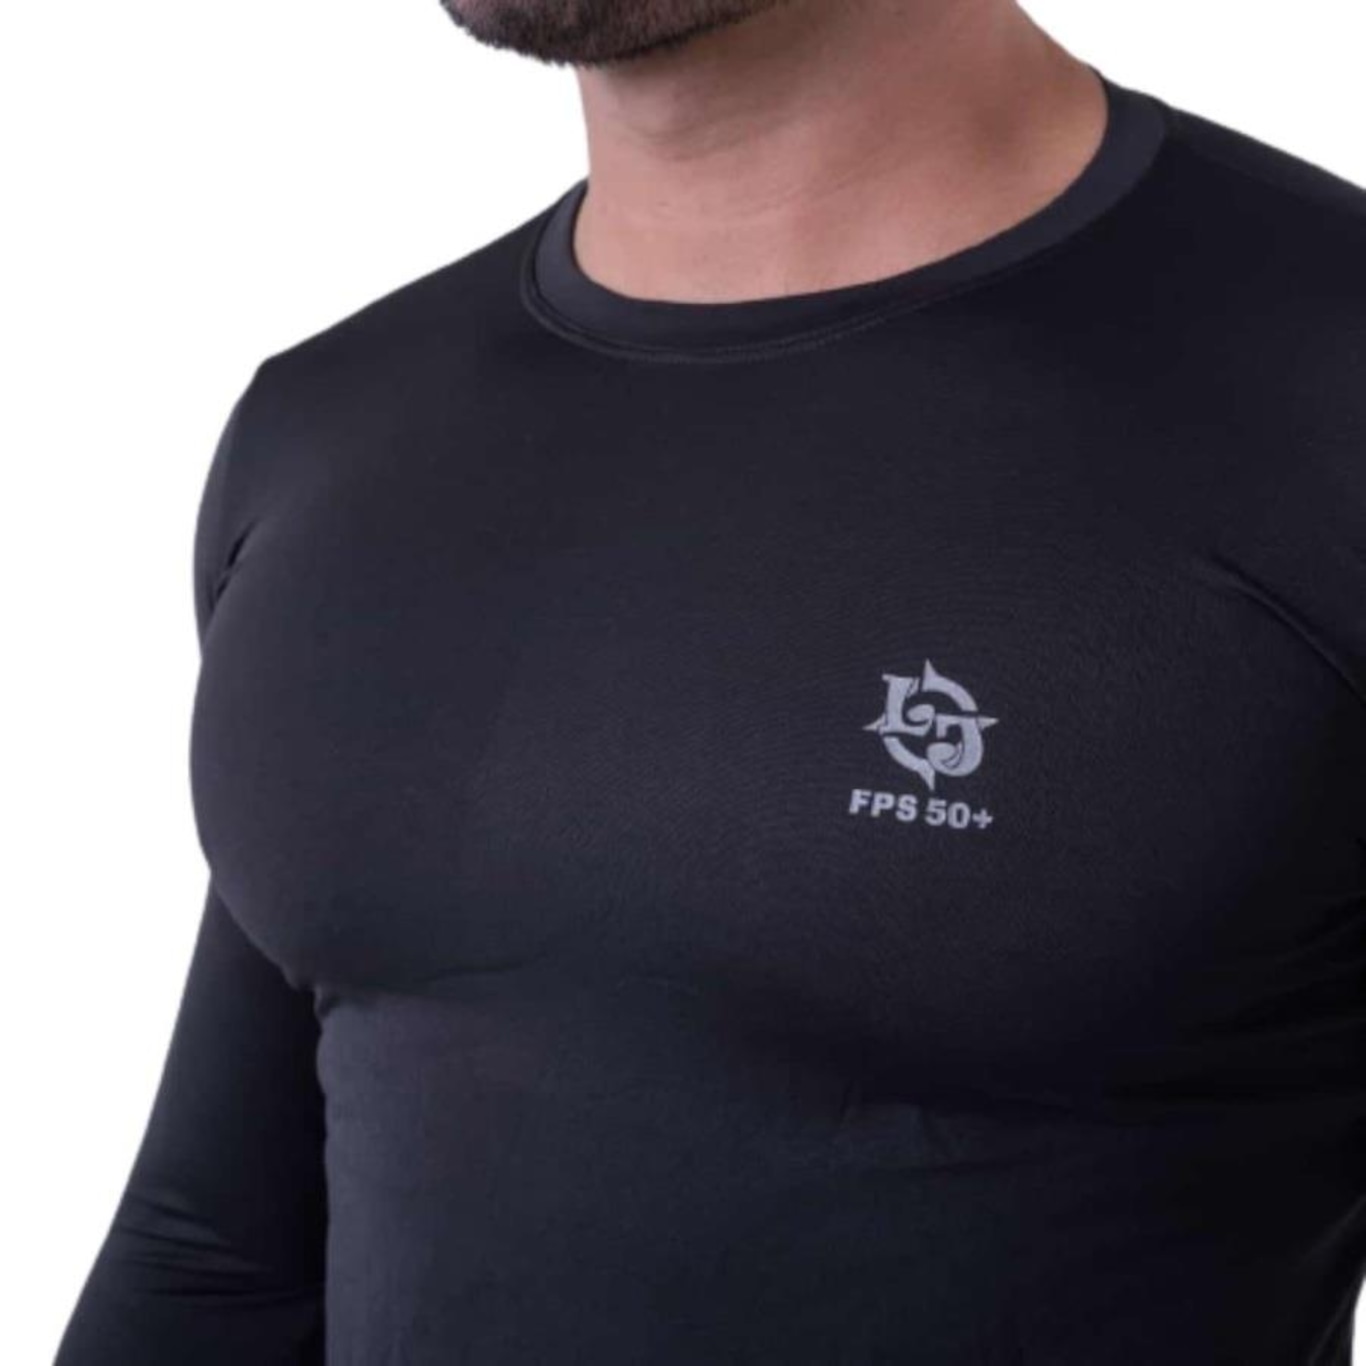 Kit 3 Camiseta Camisa Térmica Segunda Pele Manga Longa Proteção Solar UV  50+ Termica Masculina